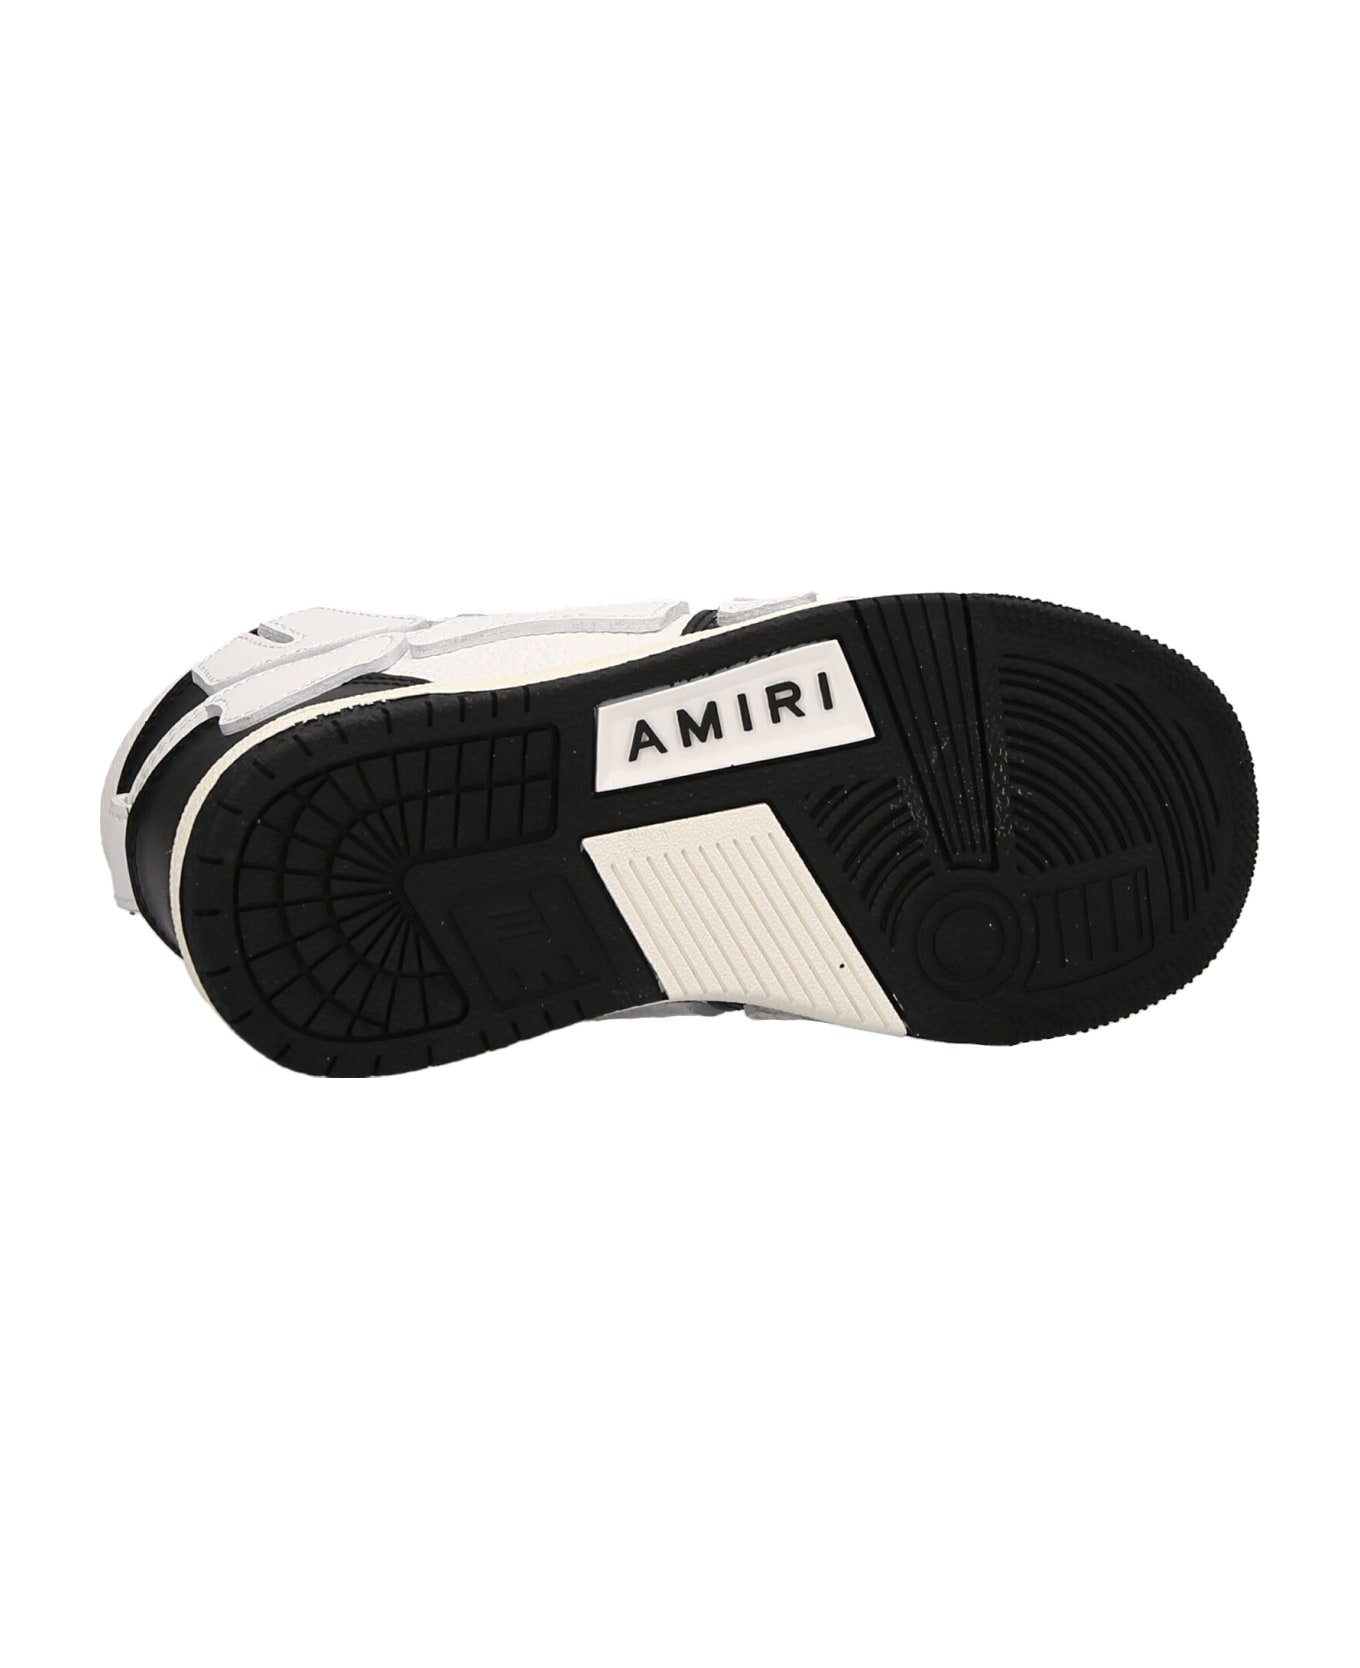 AMIRI 'skel' Sneakers - White/Black シューズ